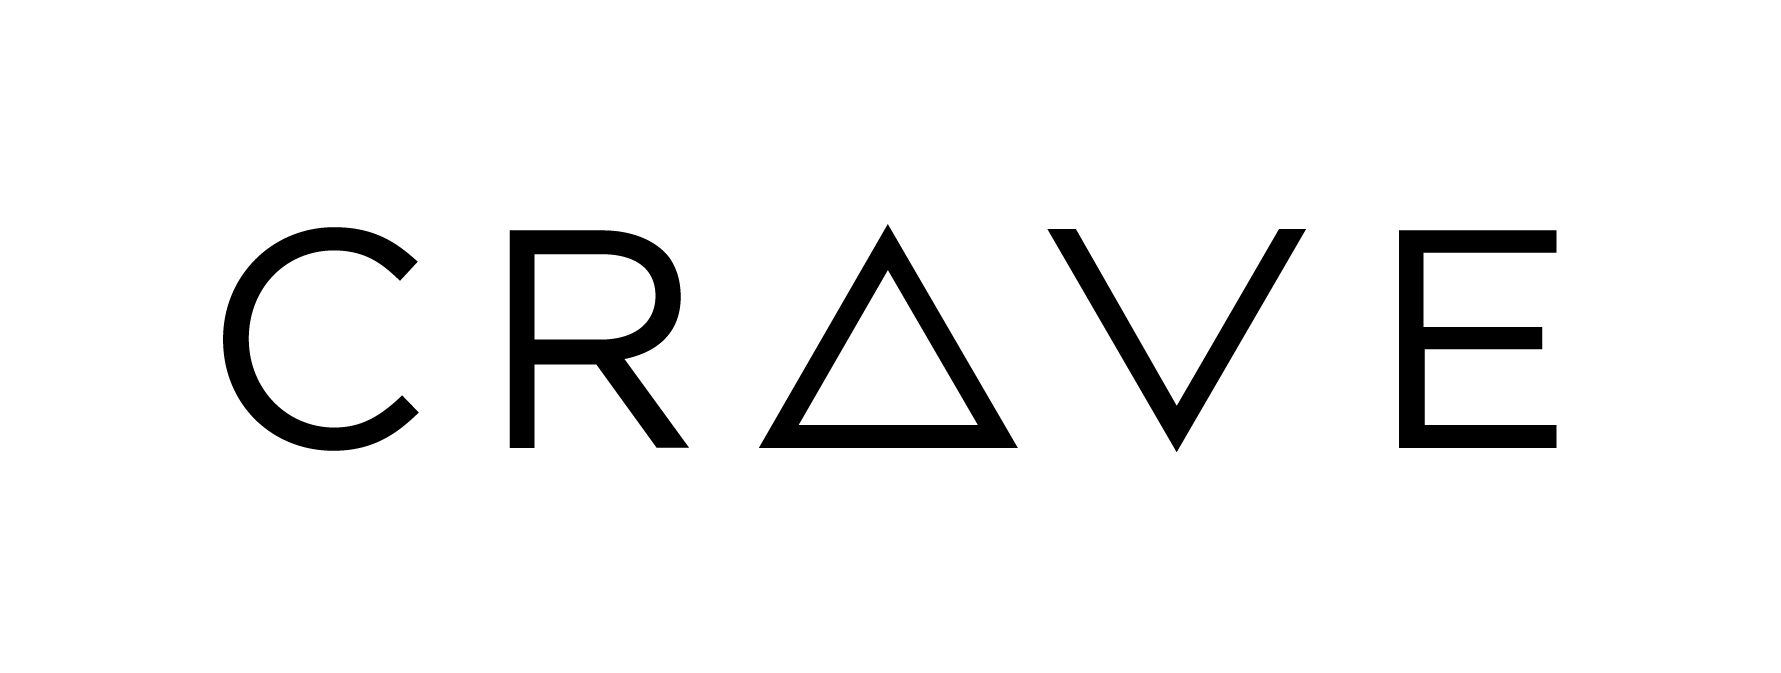 Black-Crave_logo